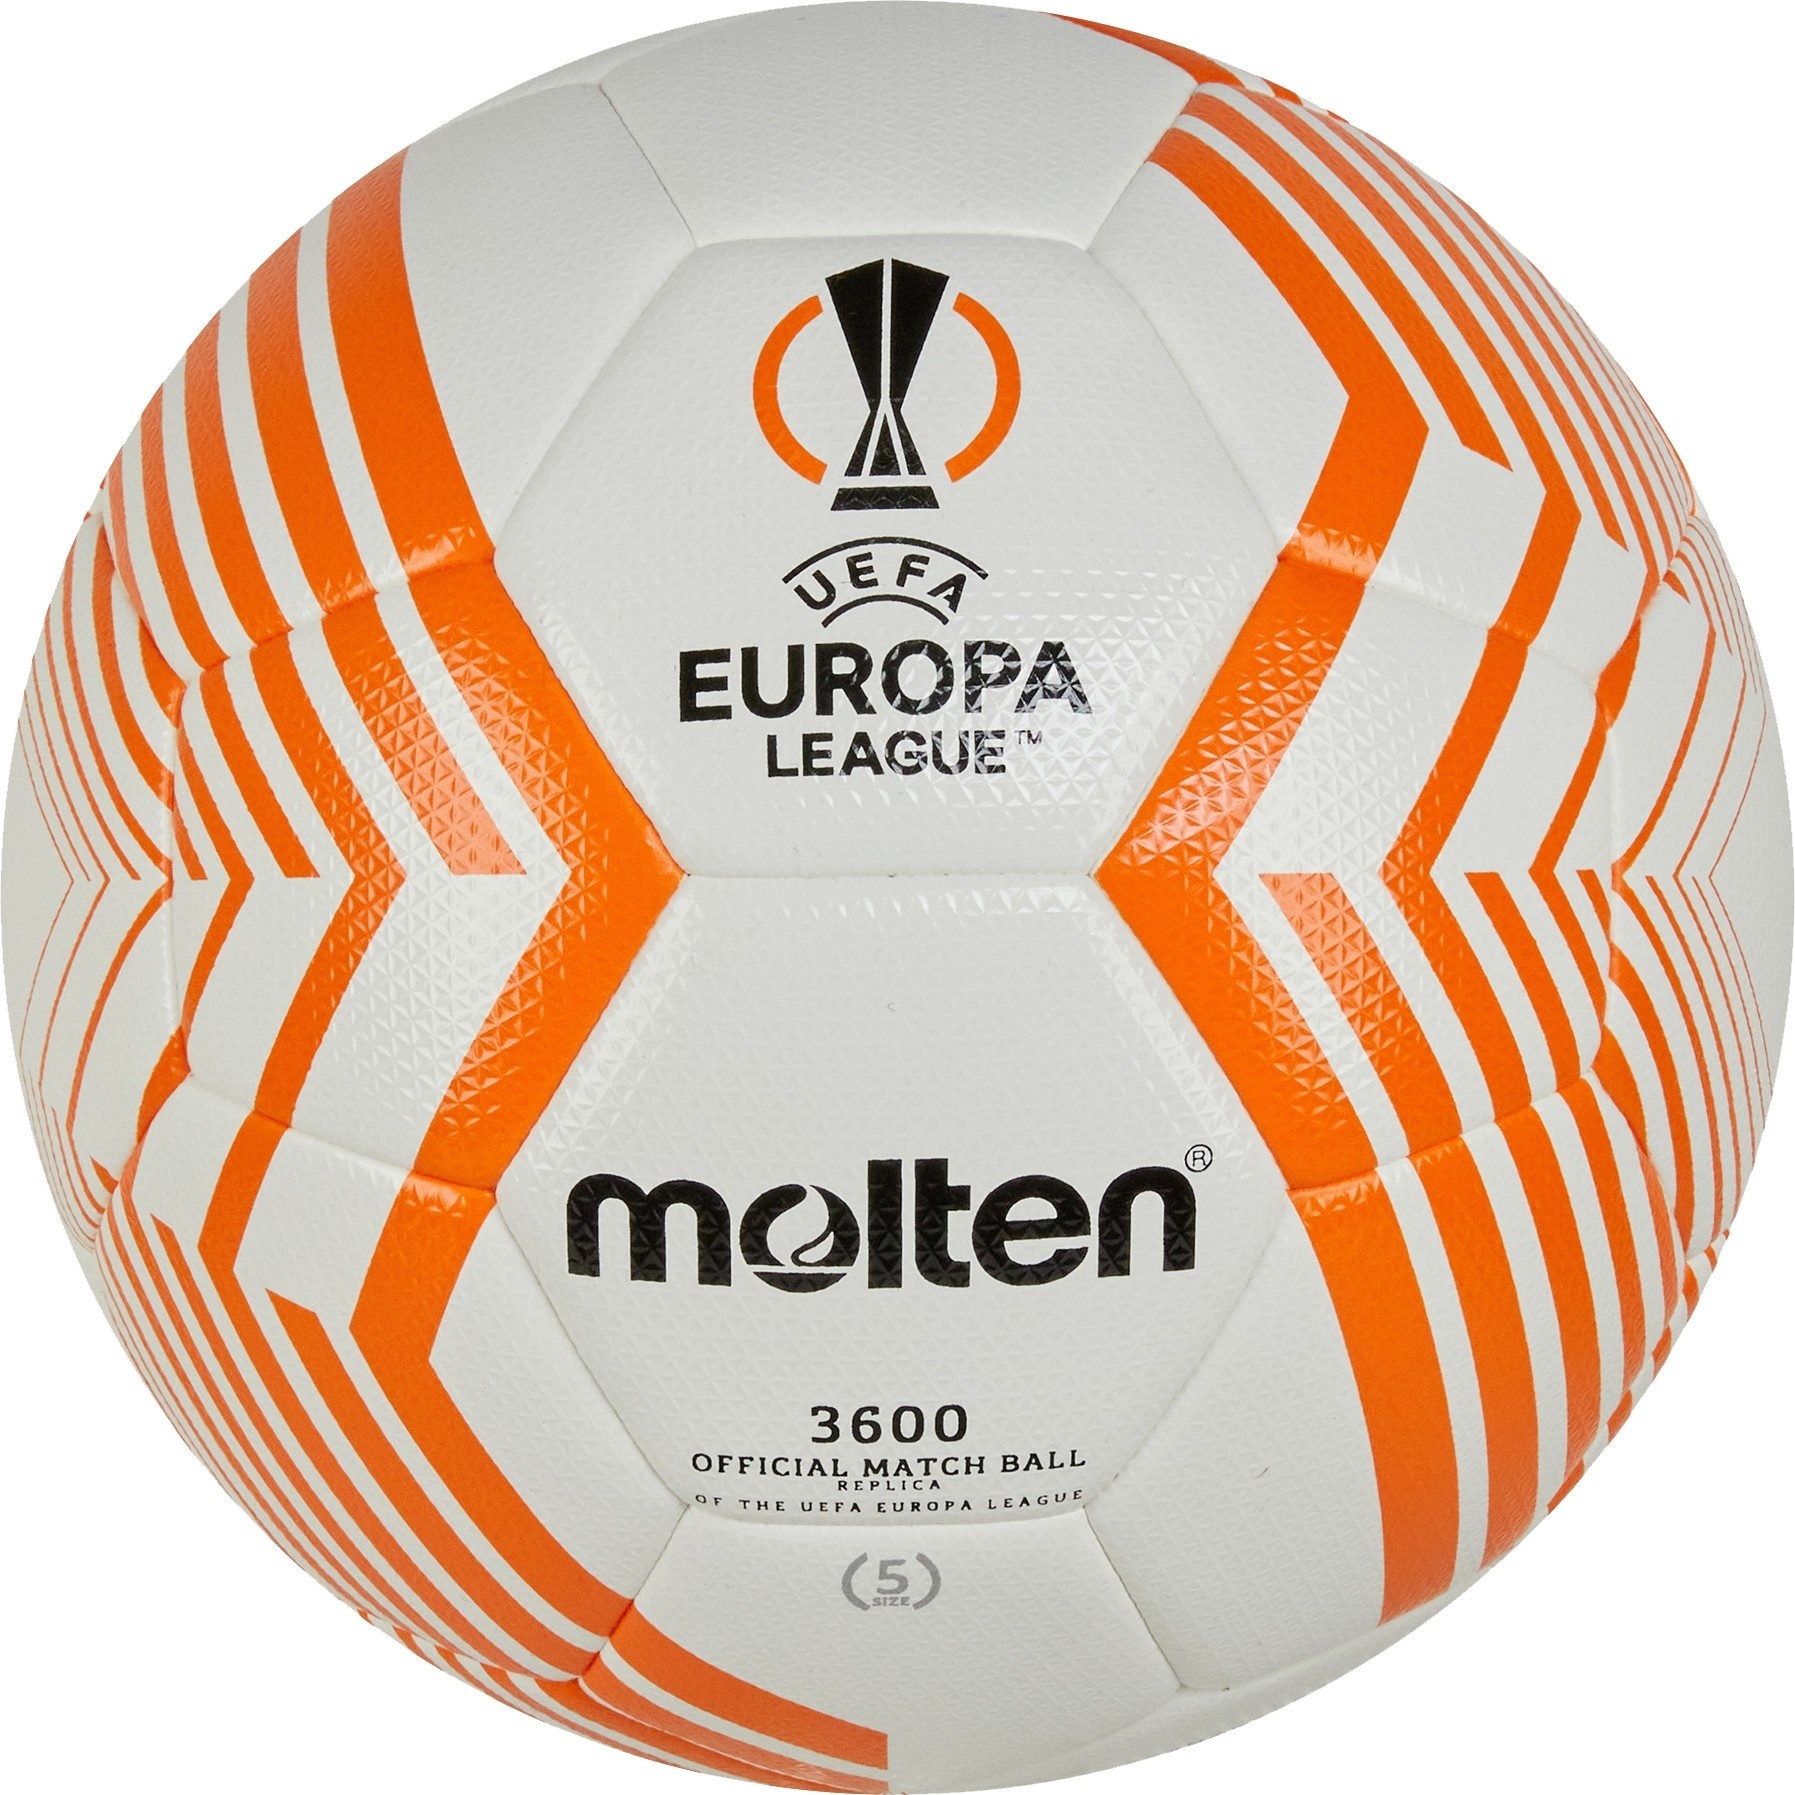 Футбольный мяч MOLTEN F5U3600-23 UEFA Europa League replica PU 5 size - фото